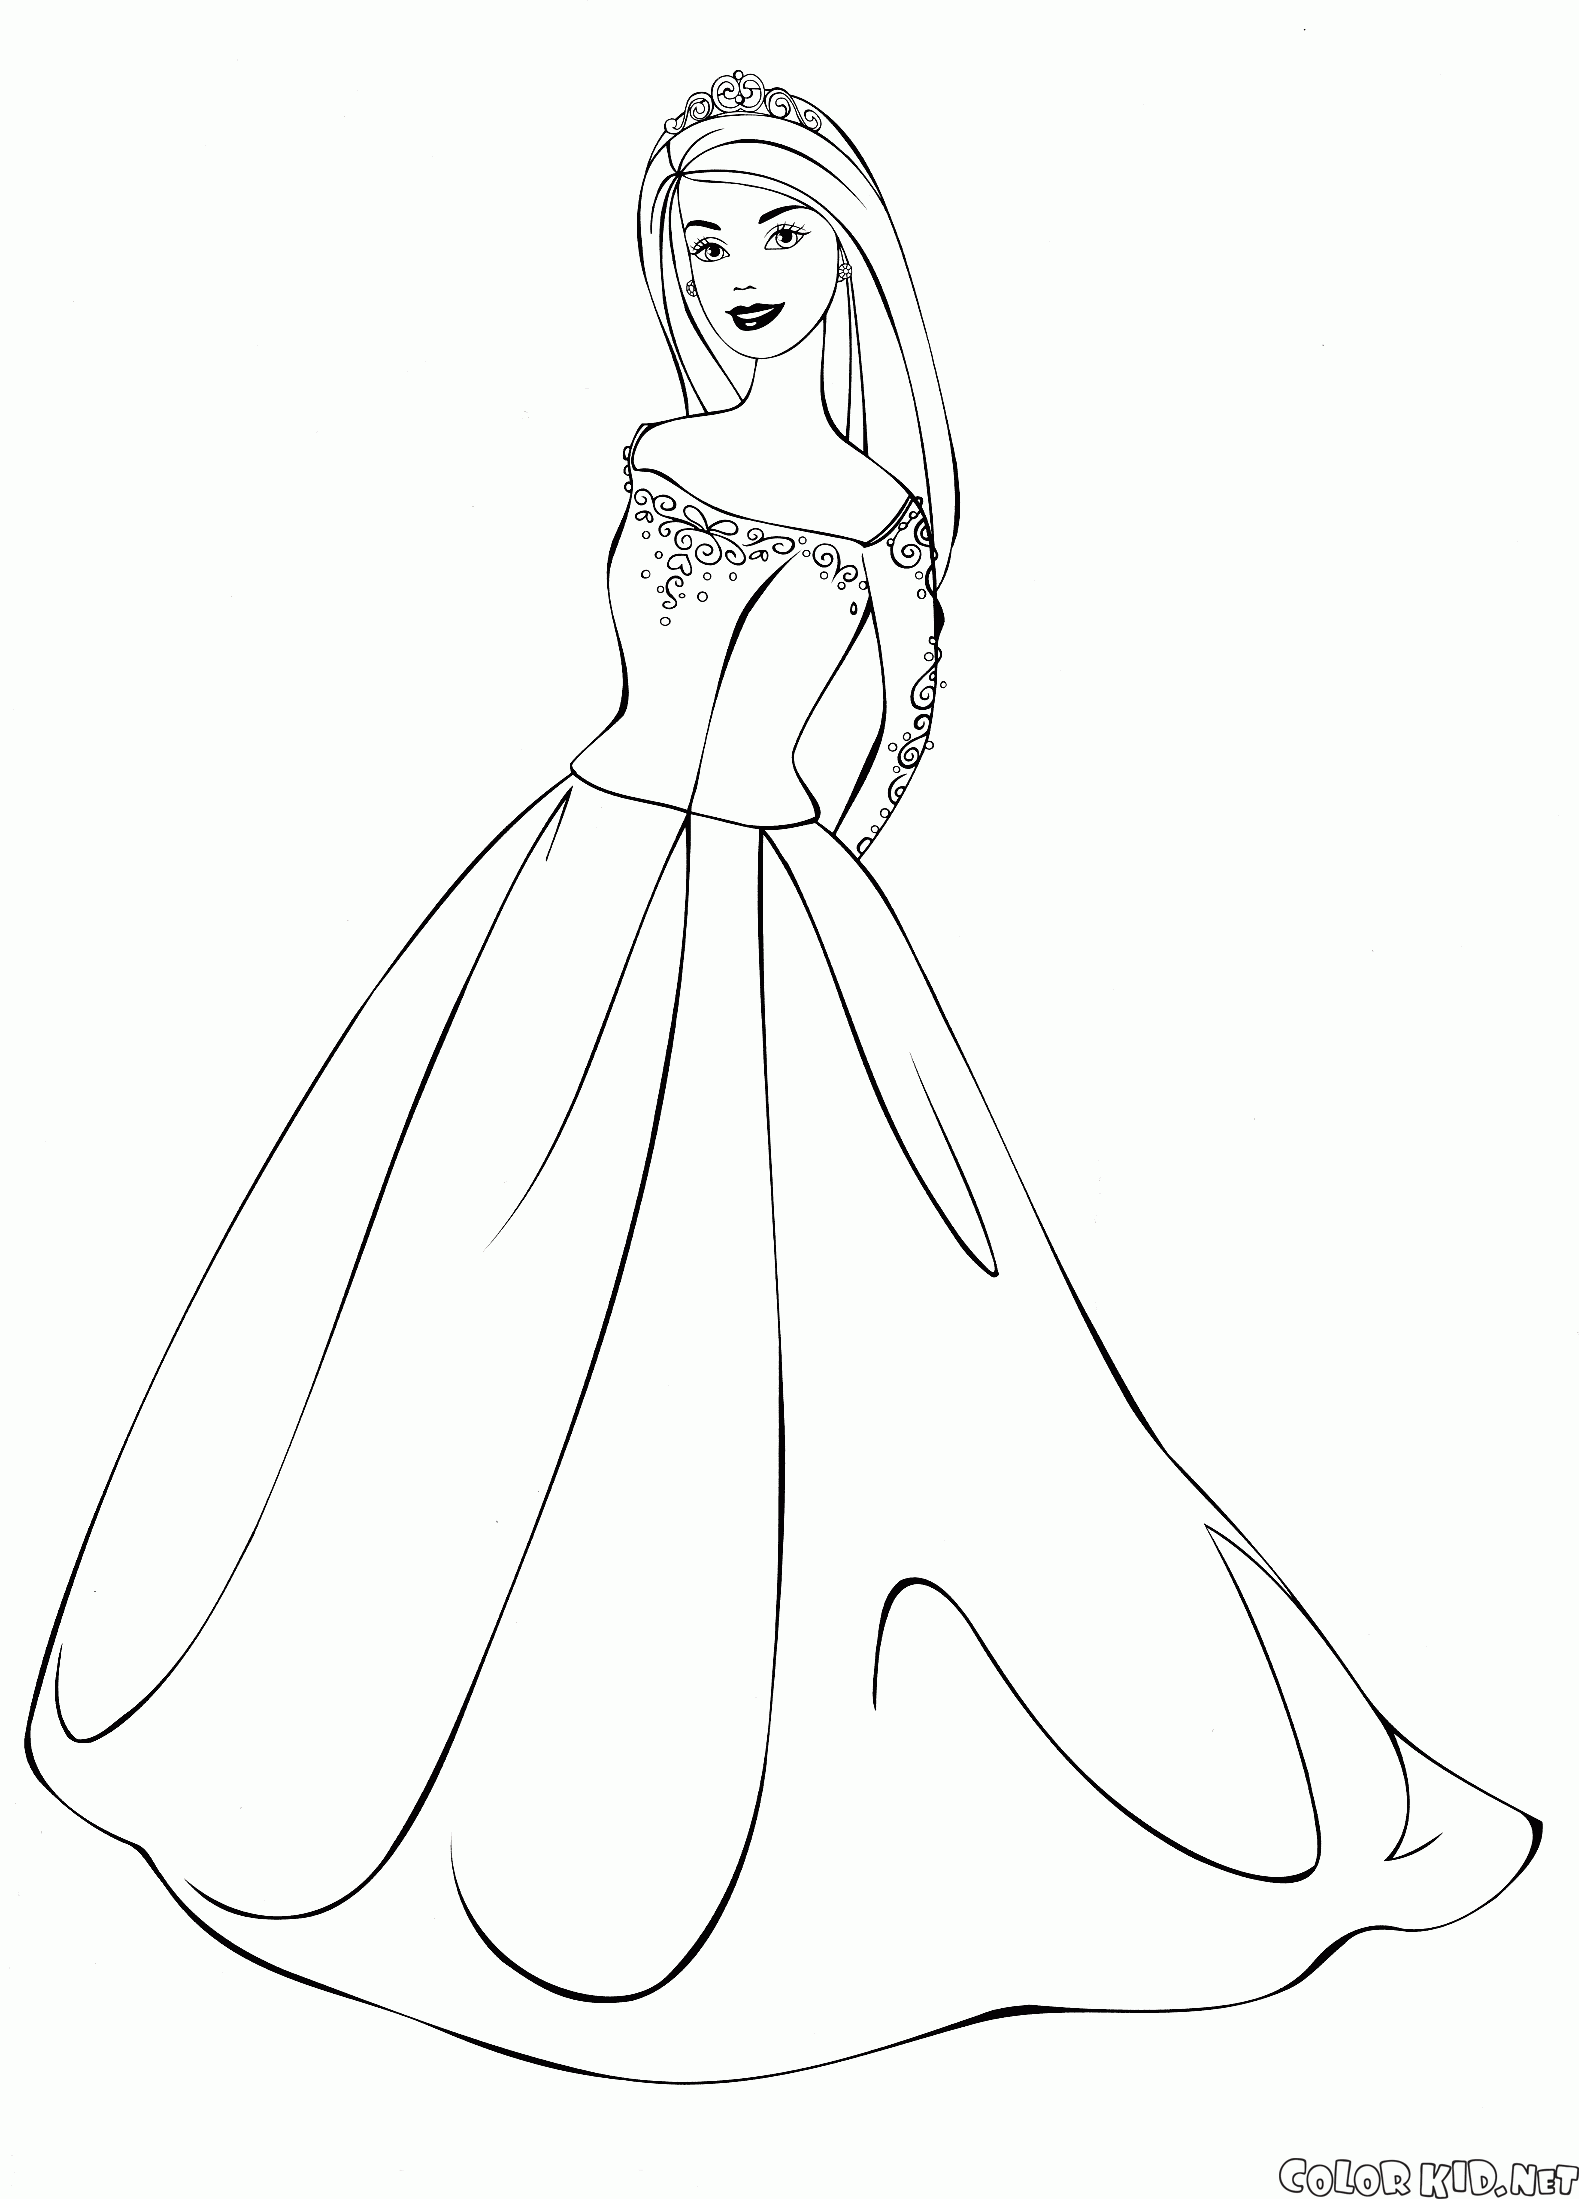 Barbie dans une robe de mariée